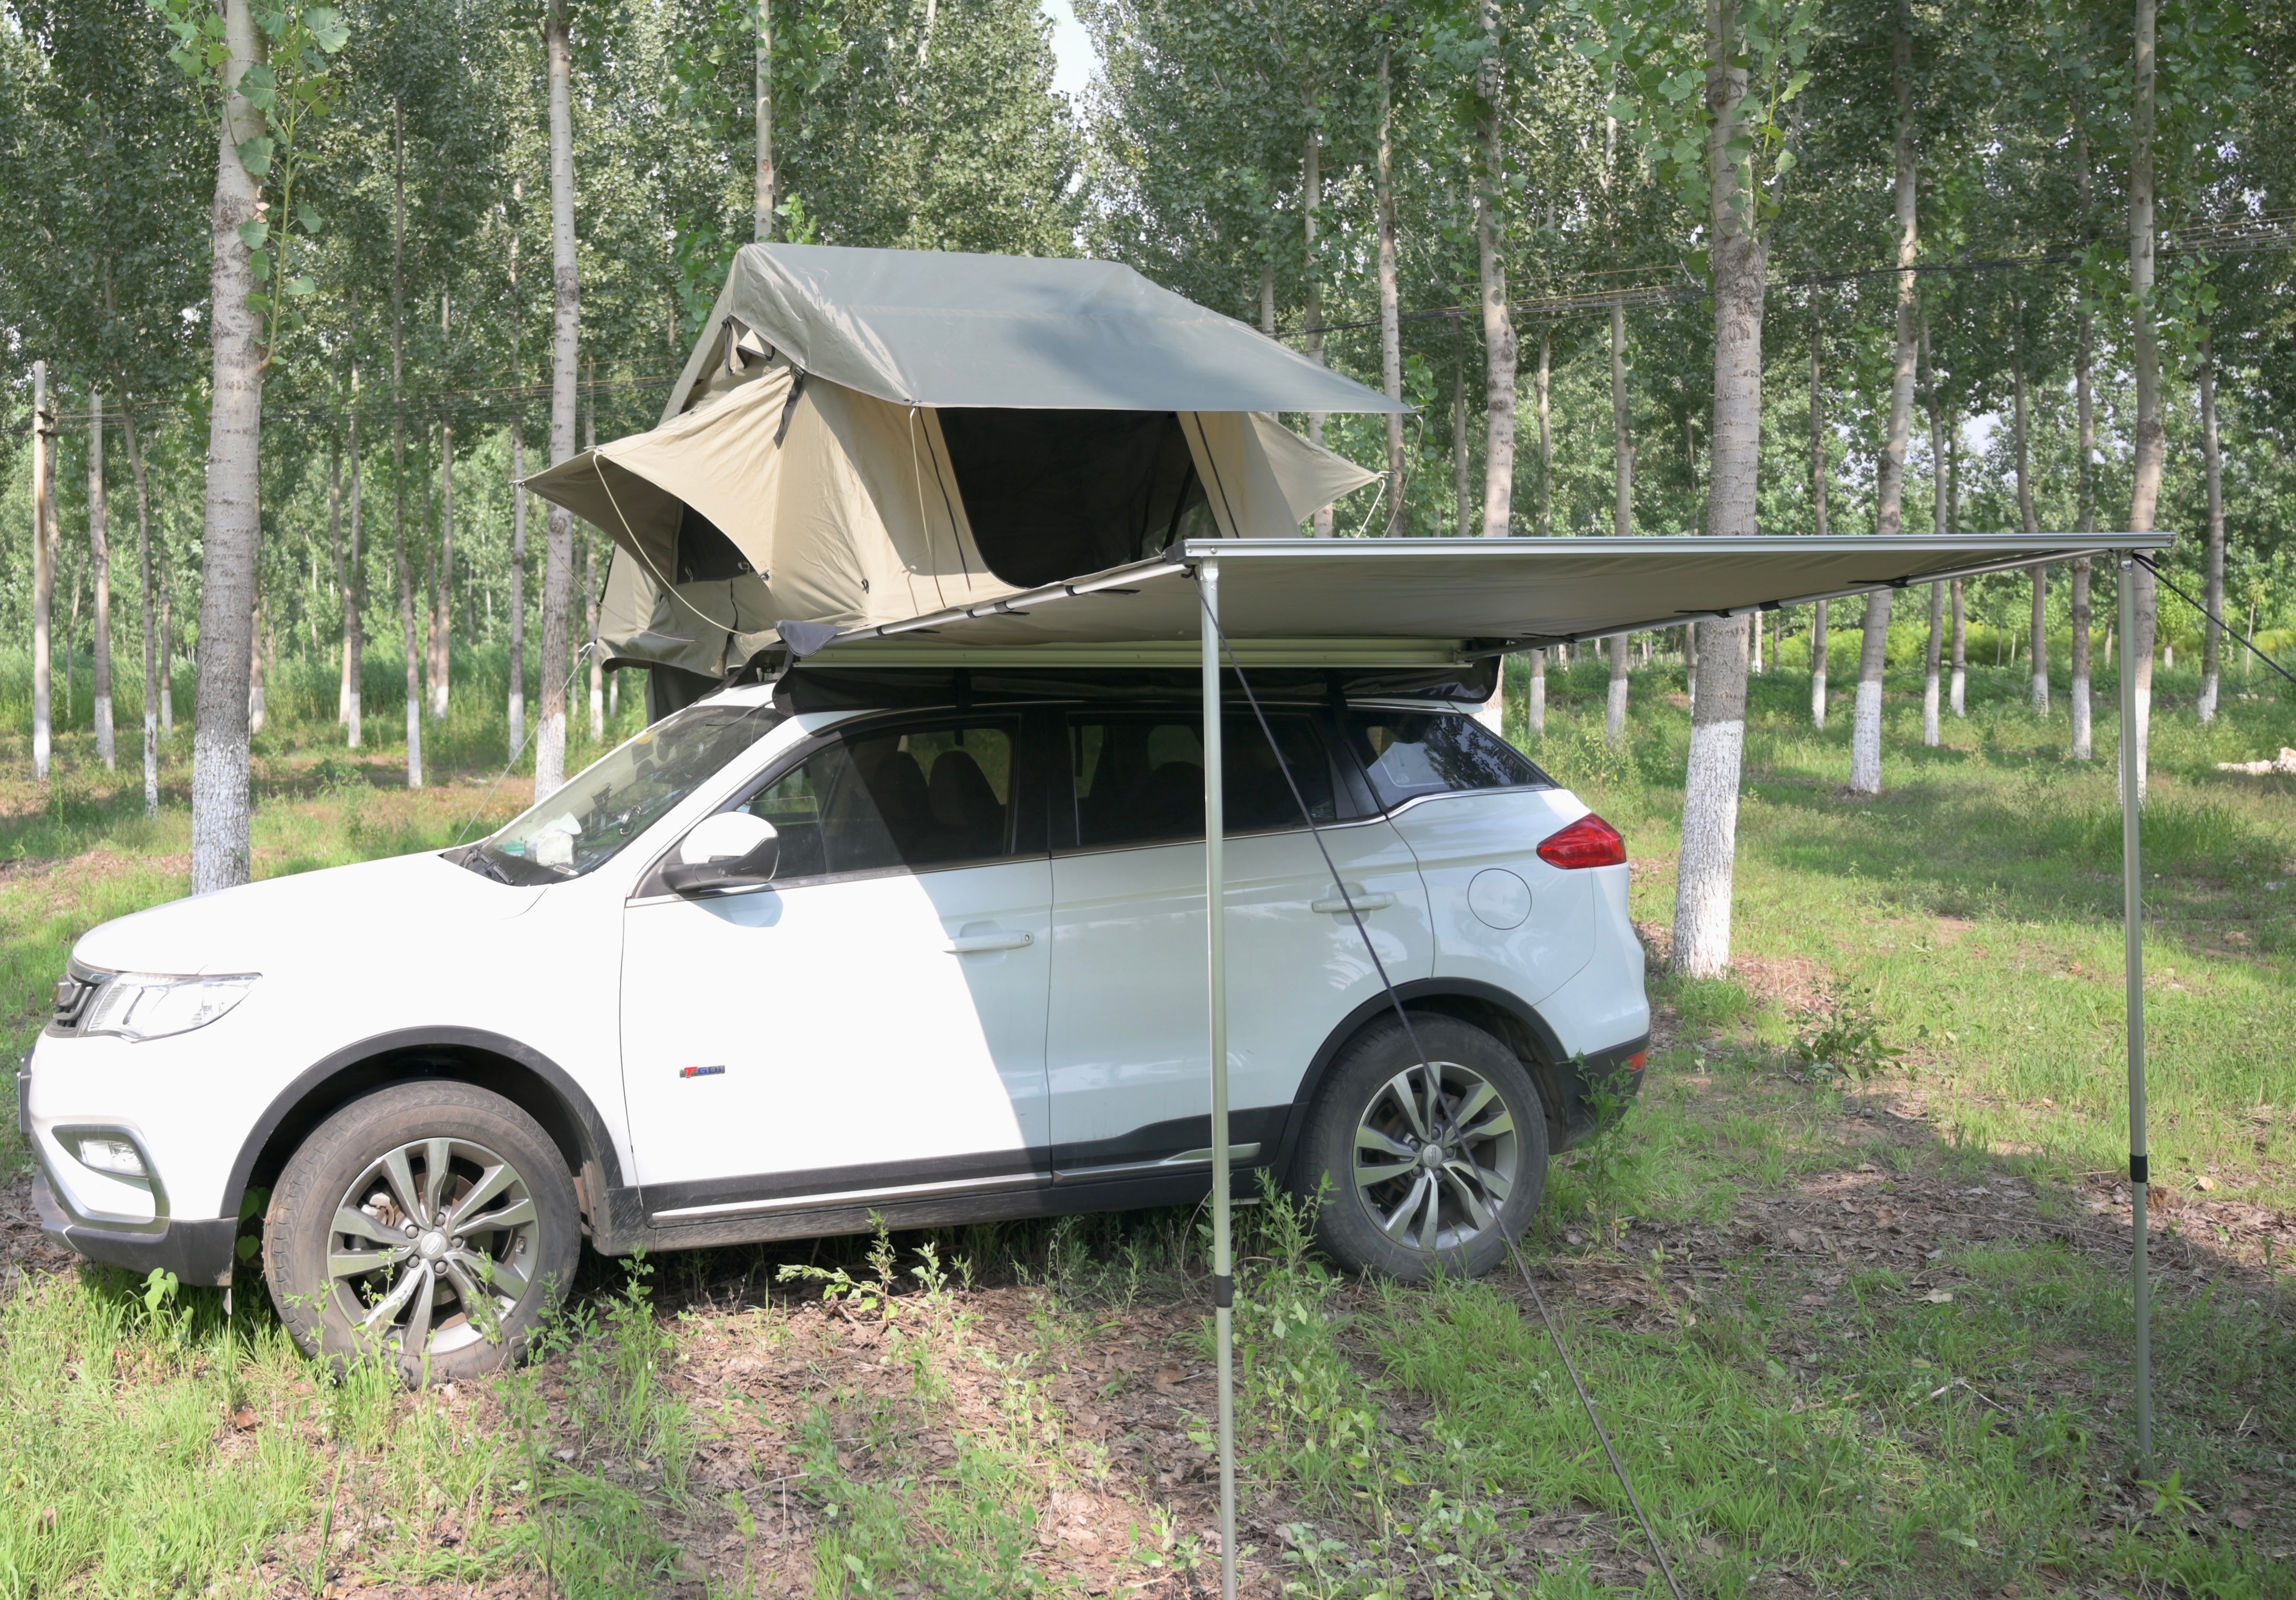 FYLZW Outdoor Auto Zelt - Vorzelt Camping Auto Zelt Camping